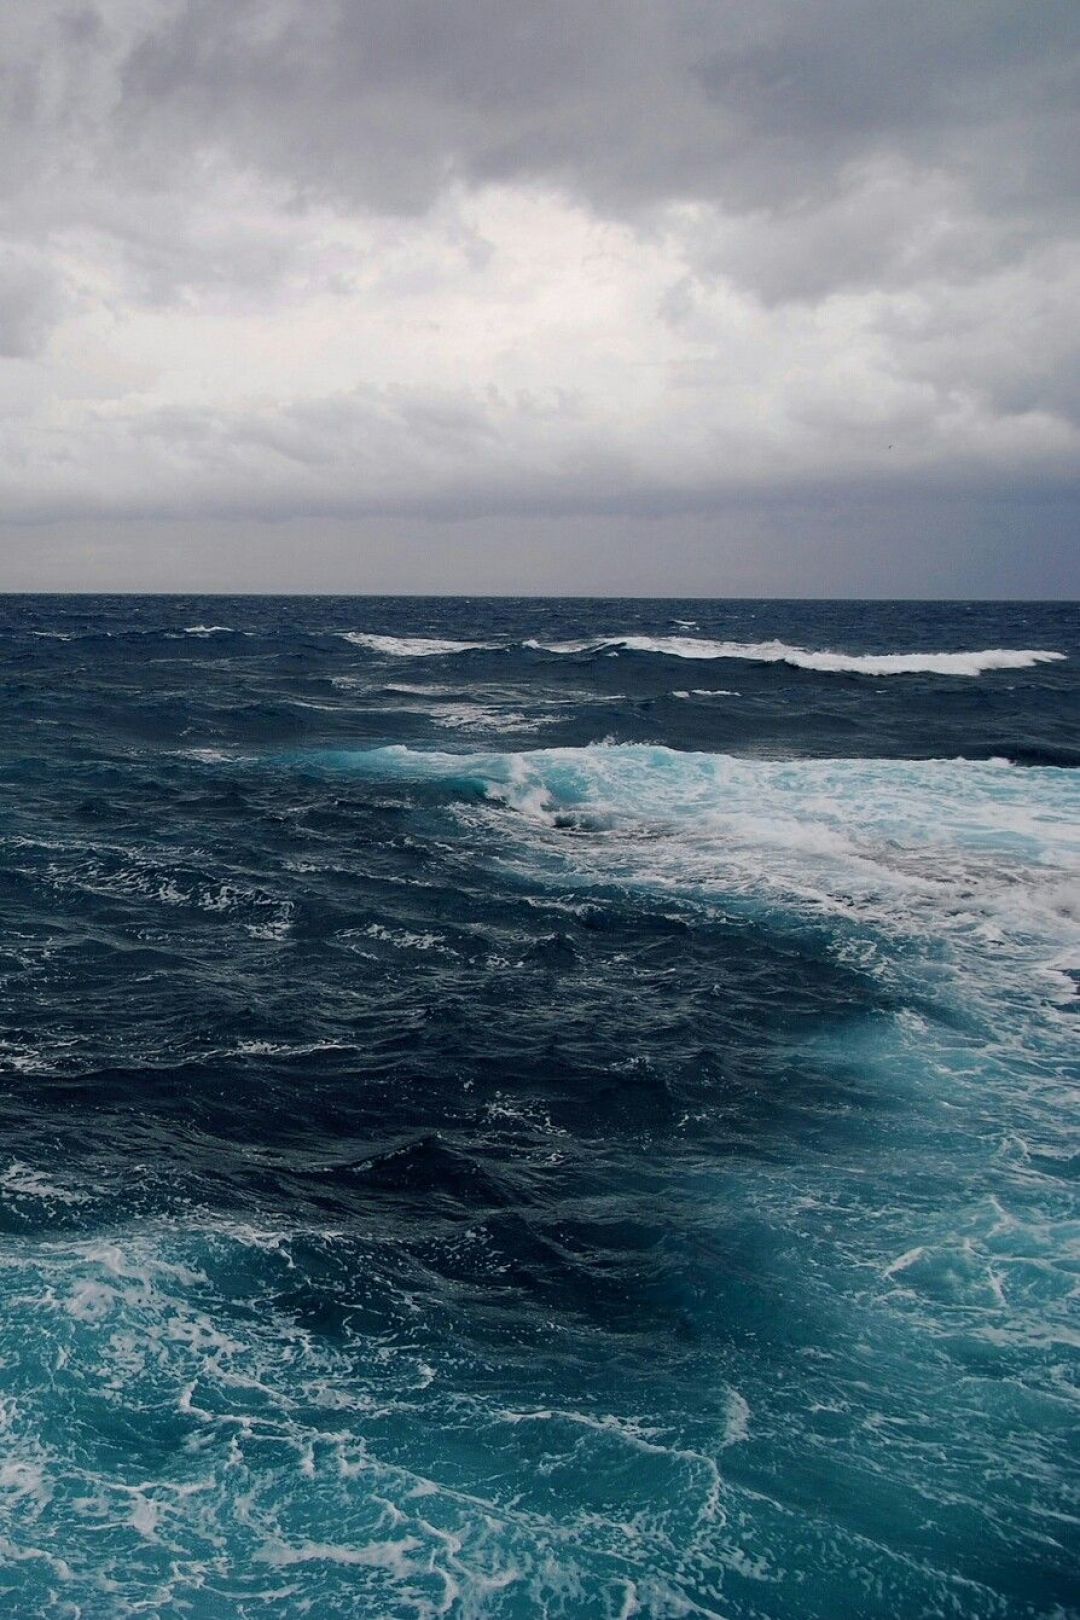 IPhone wallpaper of a stormy ocean - Ocean, water